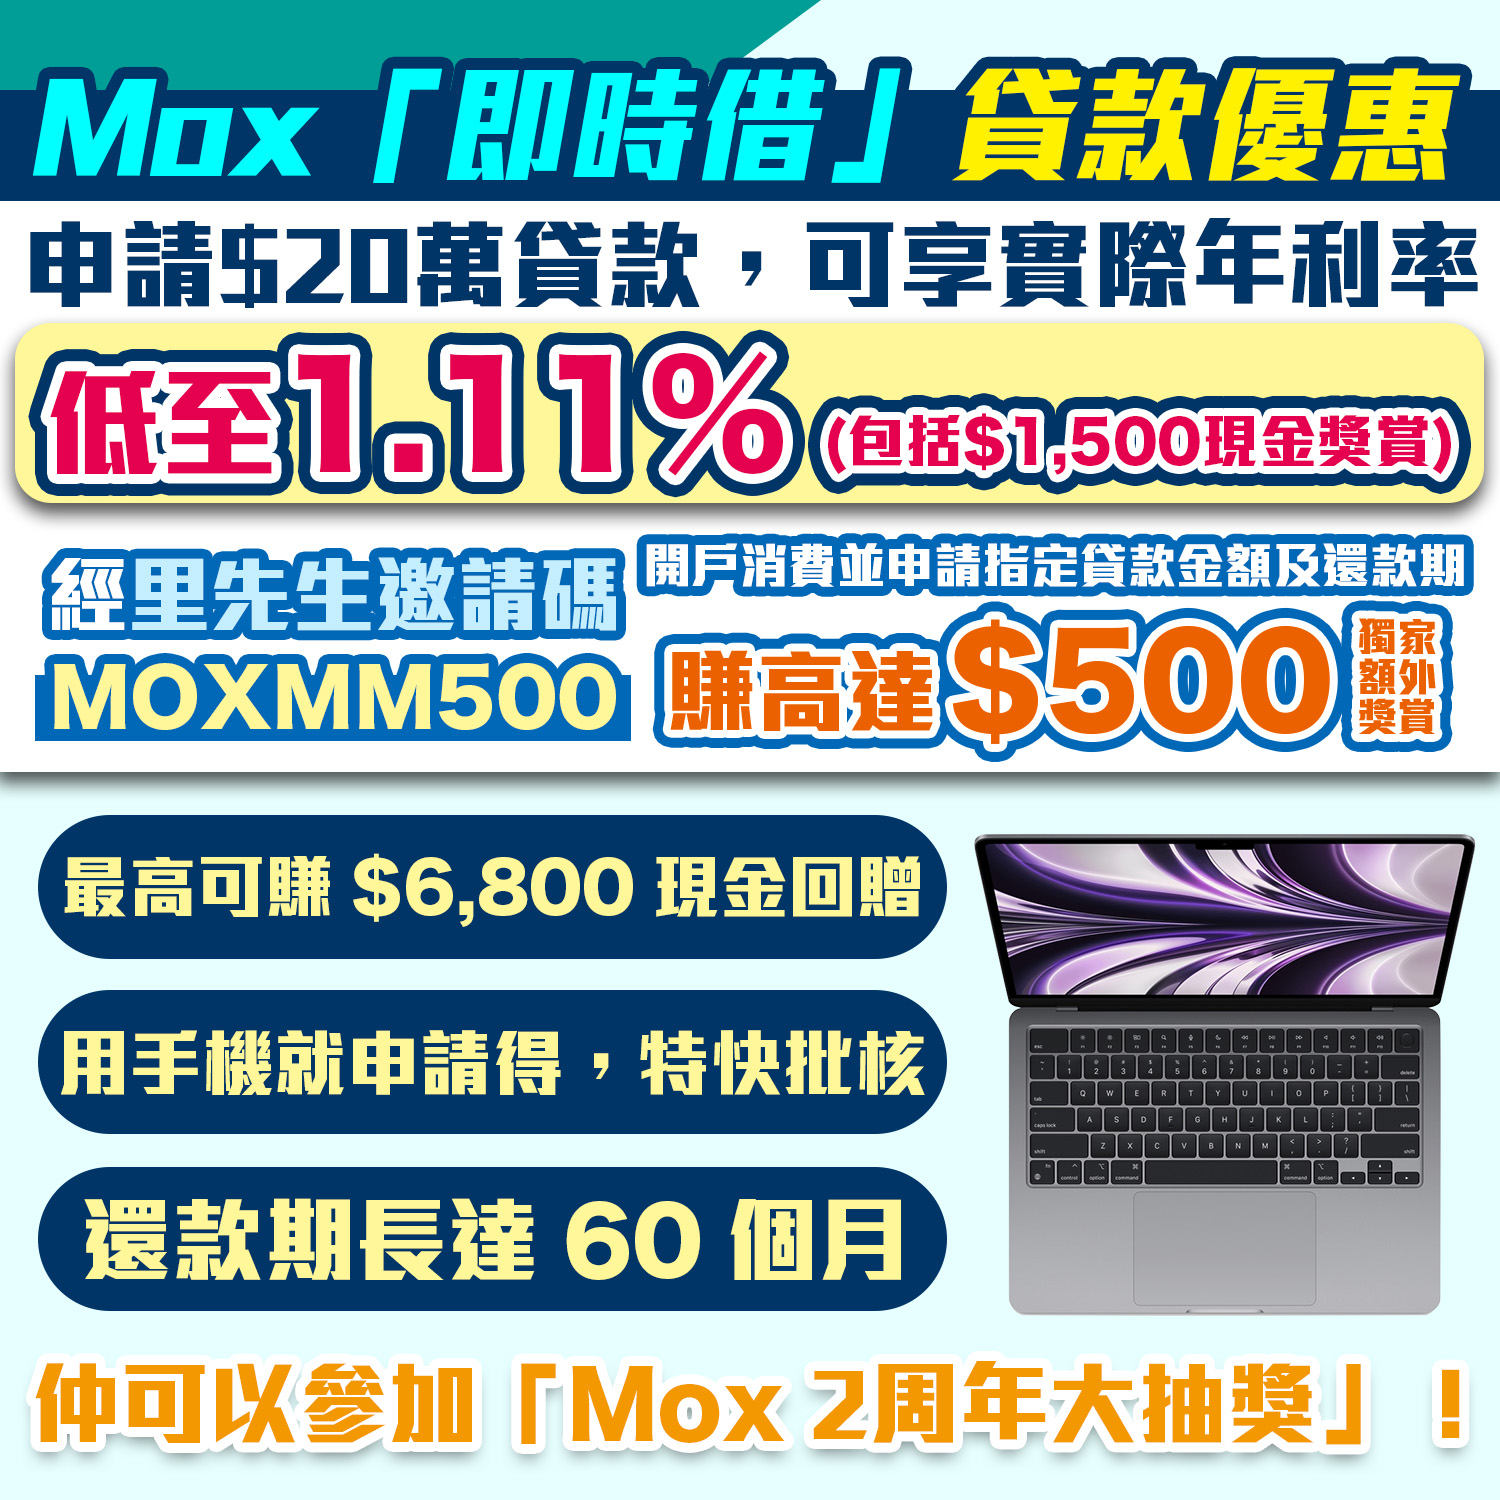 【Mox Bank貸款優惠】「即時借」賺取高達HK$6,800現金奬賞*+里先生額外HK$500獎賞！實際年利率低至0.87%^！